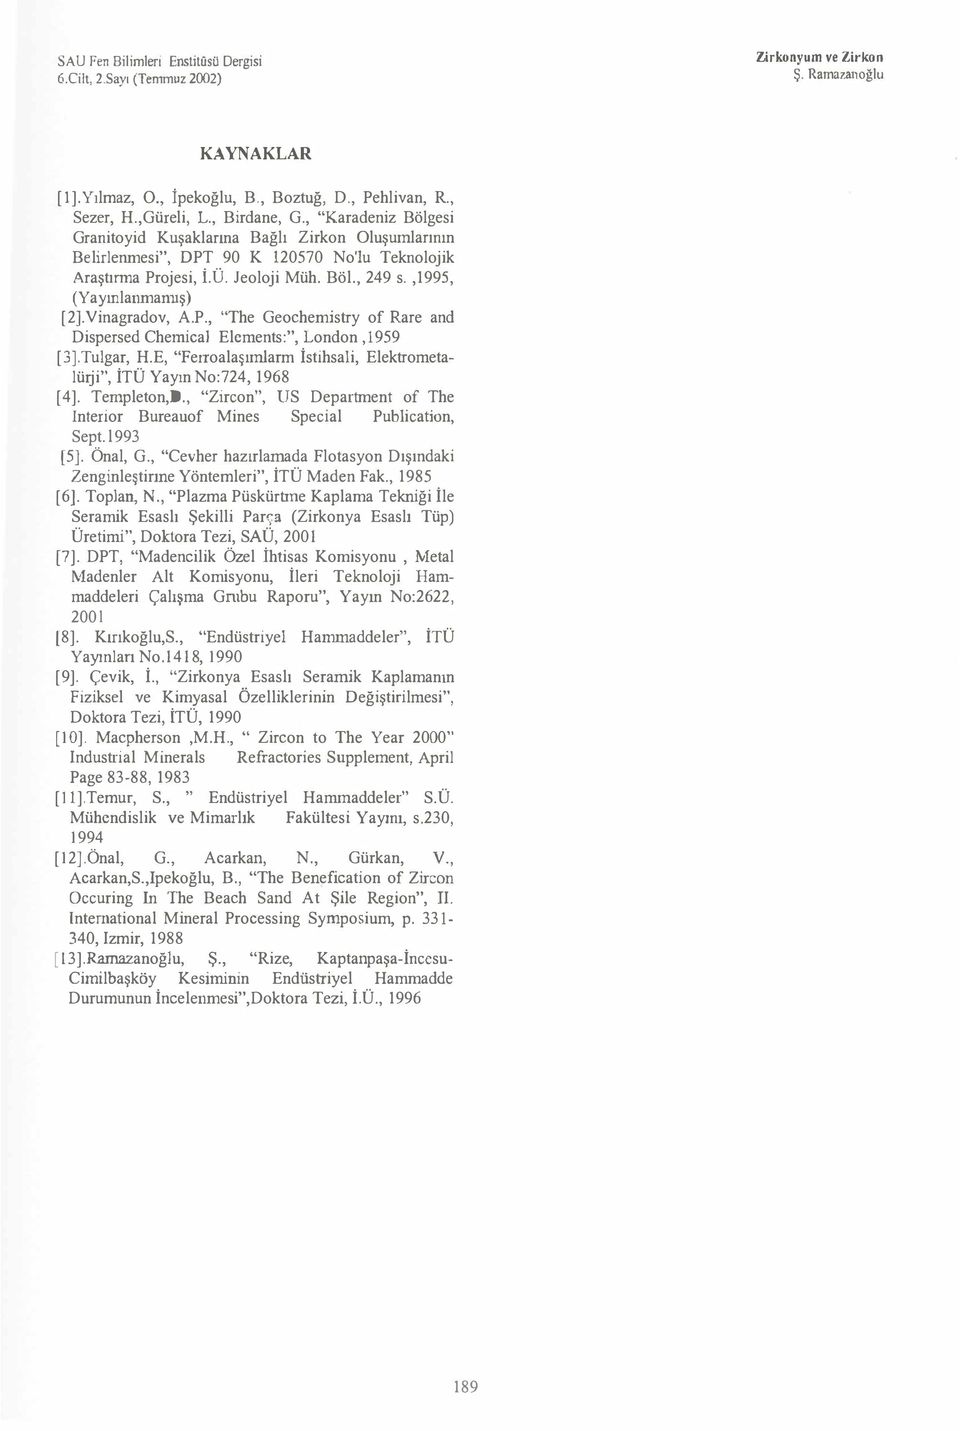 Vinagradov, A.P., 'The Geochemistry of Rare and Dispersed Cheınica1 Elements:", London,1959 [3].Tulgar, H.E, "Ferroalaşımlarm İstihsali, Elektrometalürji", İTÜ Yayın No:724, 1968 [4]. Ternpleton,D.